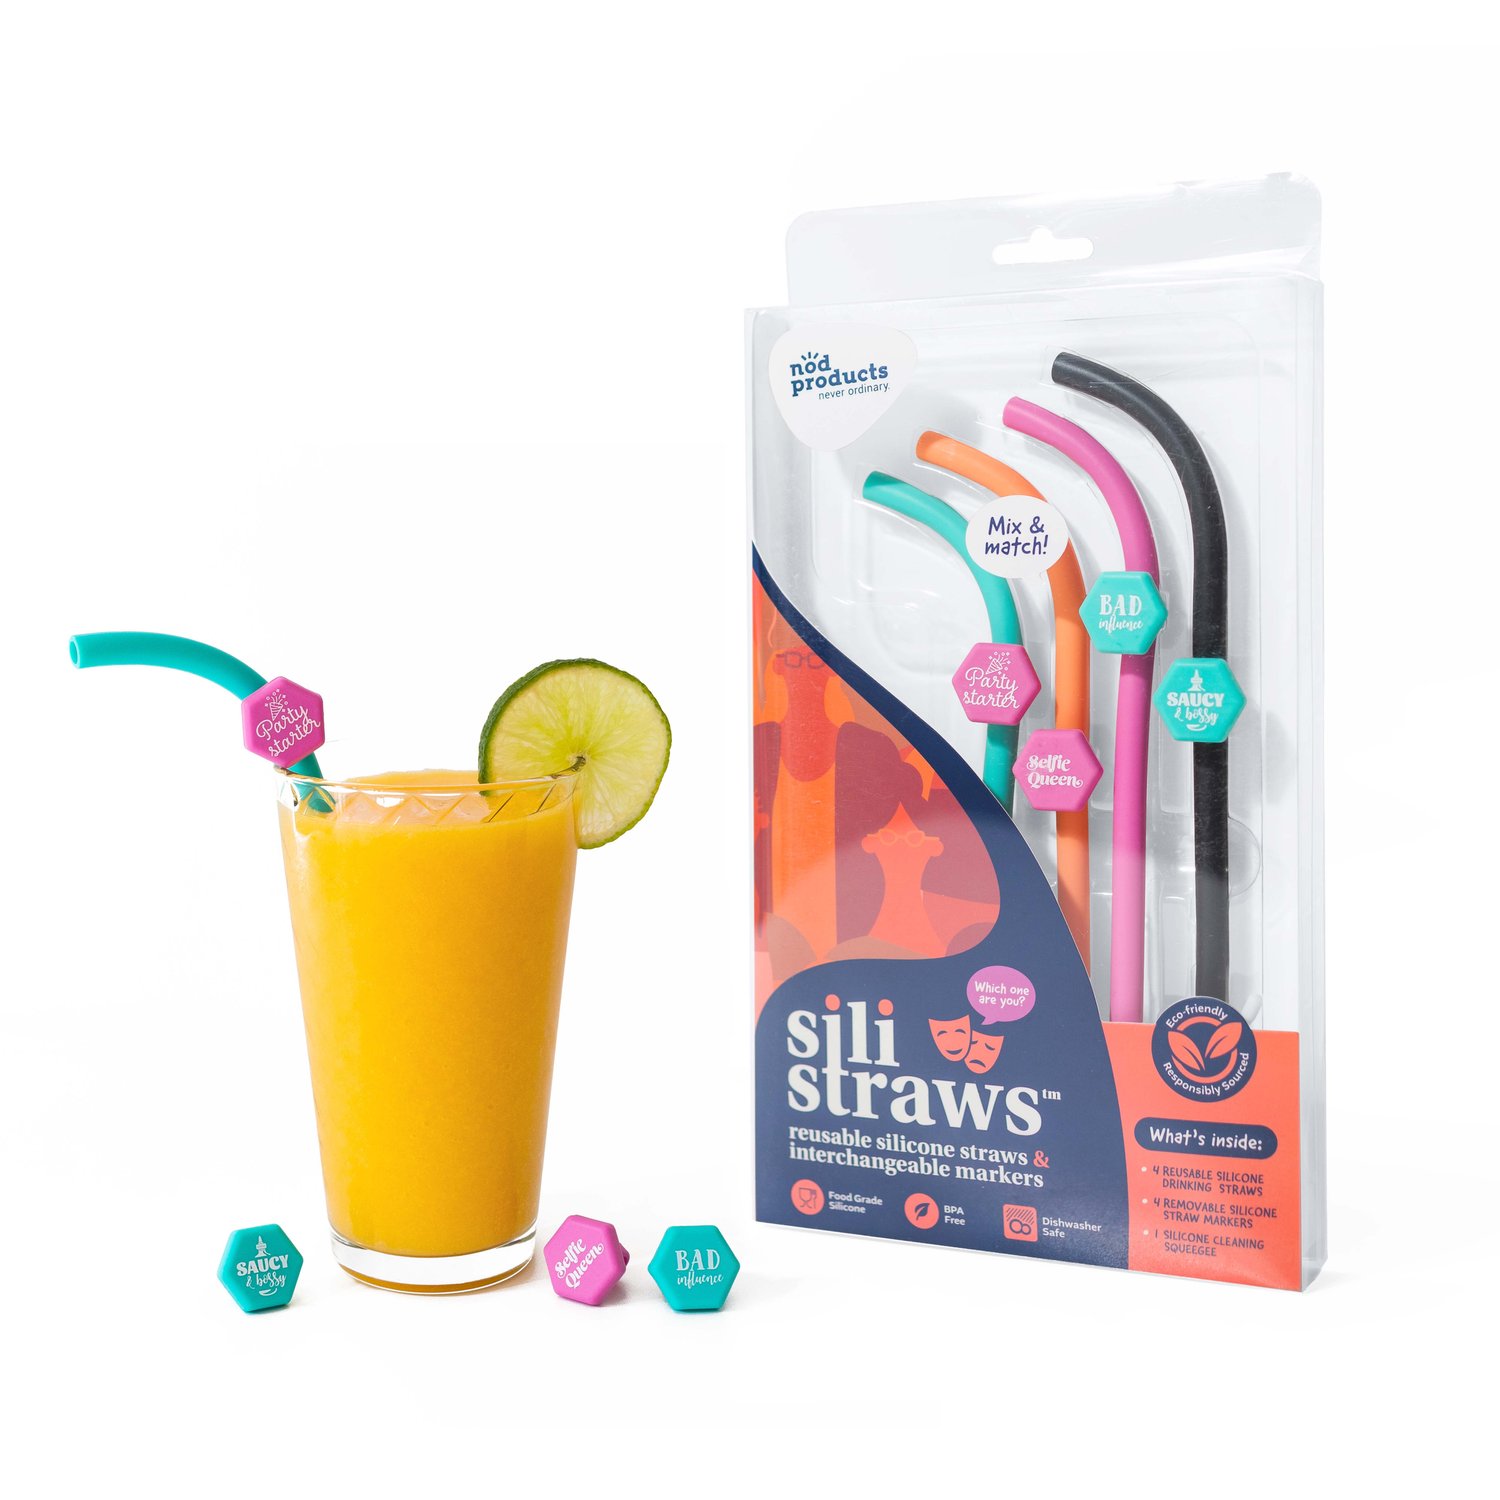 Heiheiup Silicone Straw Caps Drinking Straw Straw Charms For